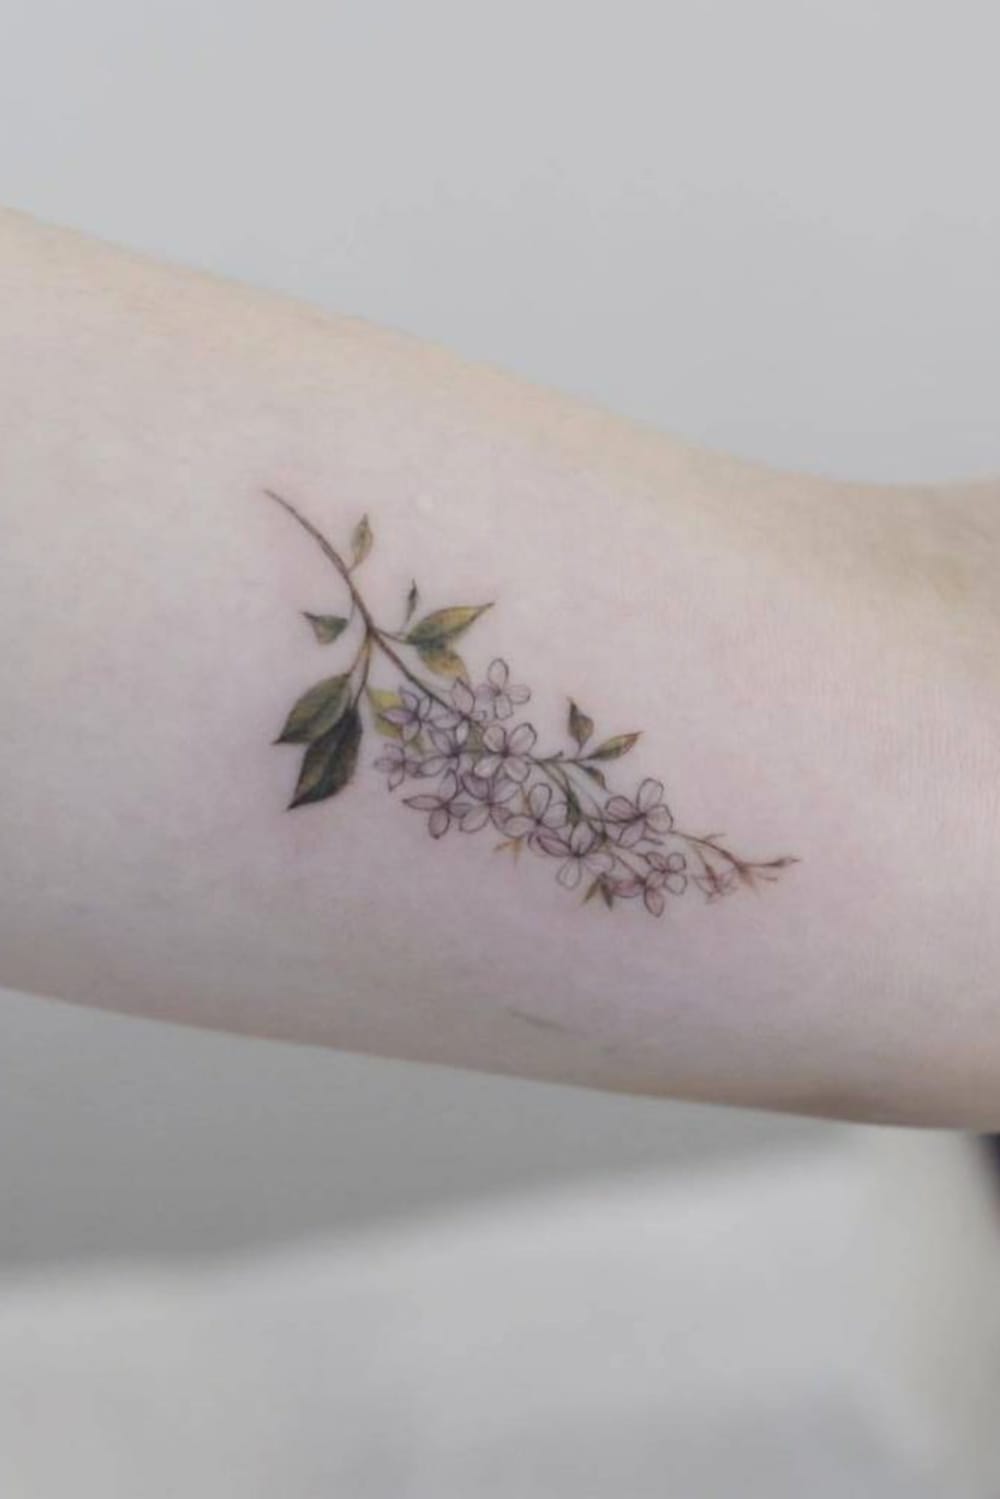 Small Magnolia tattoo